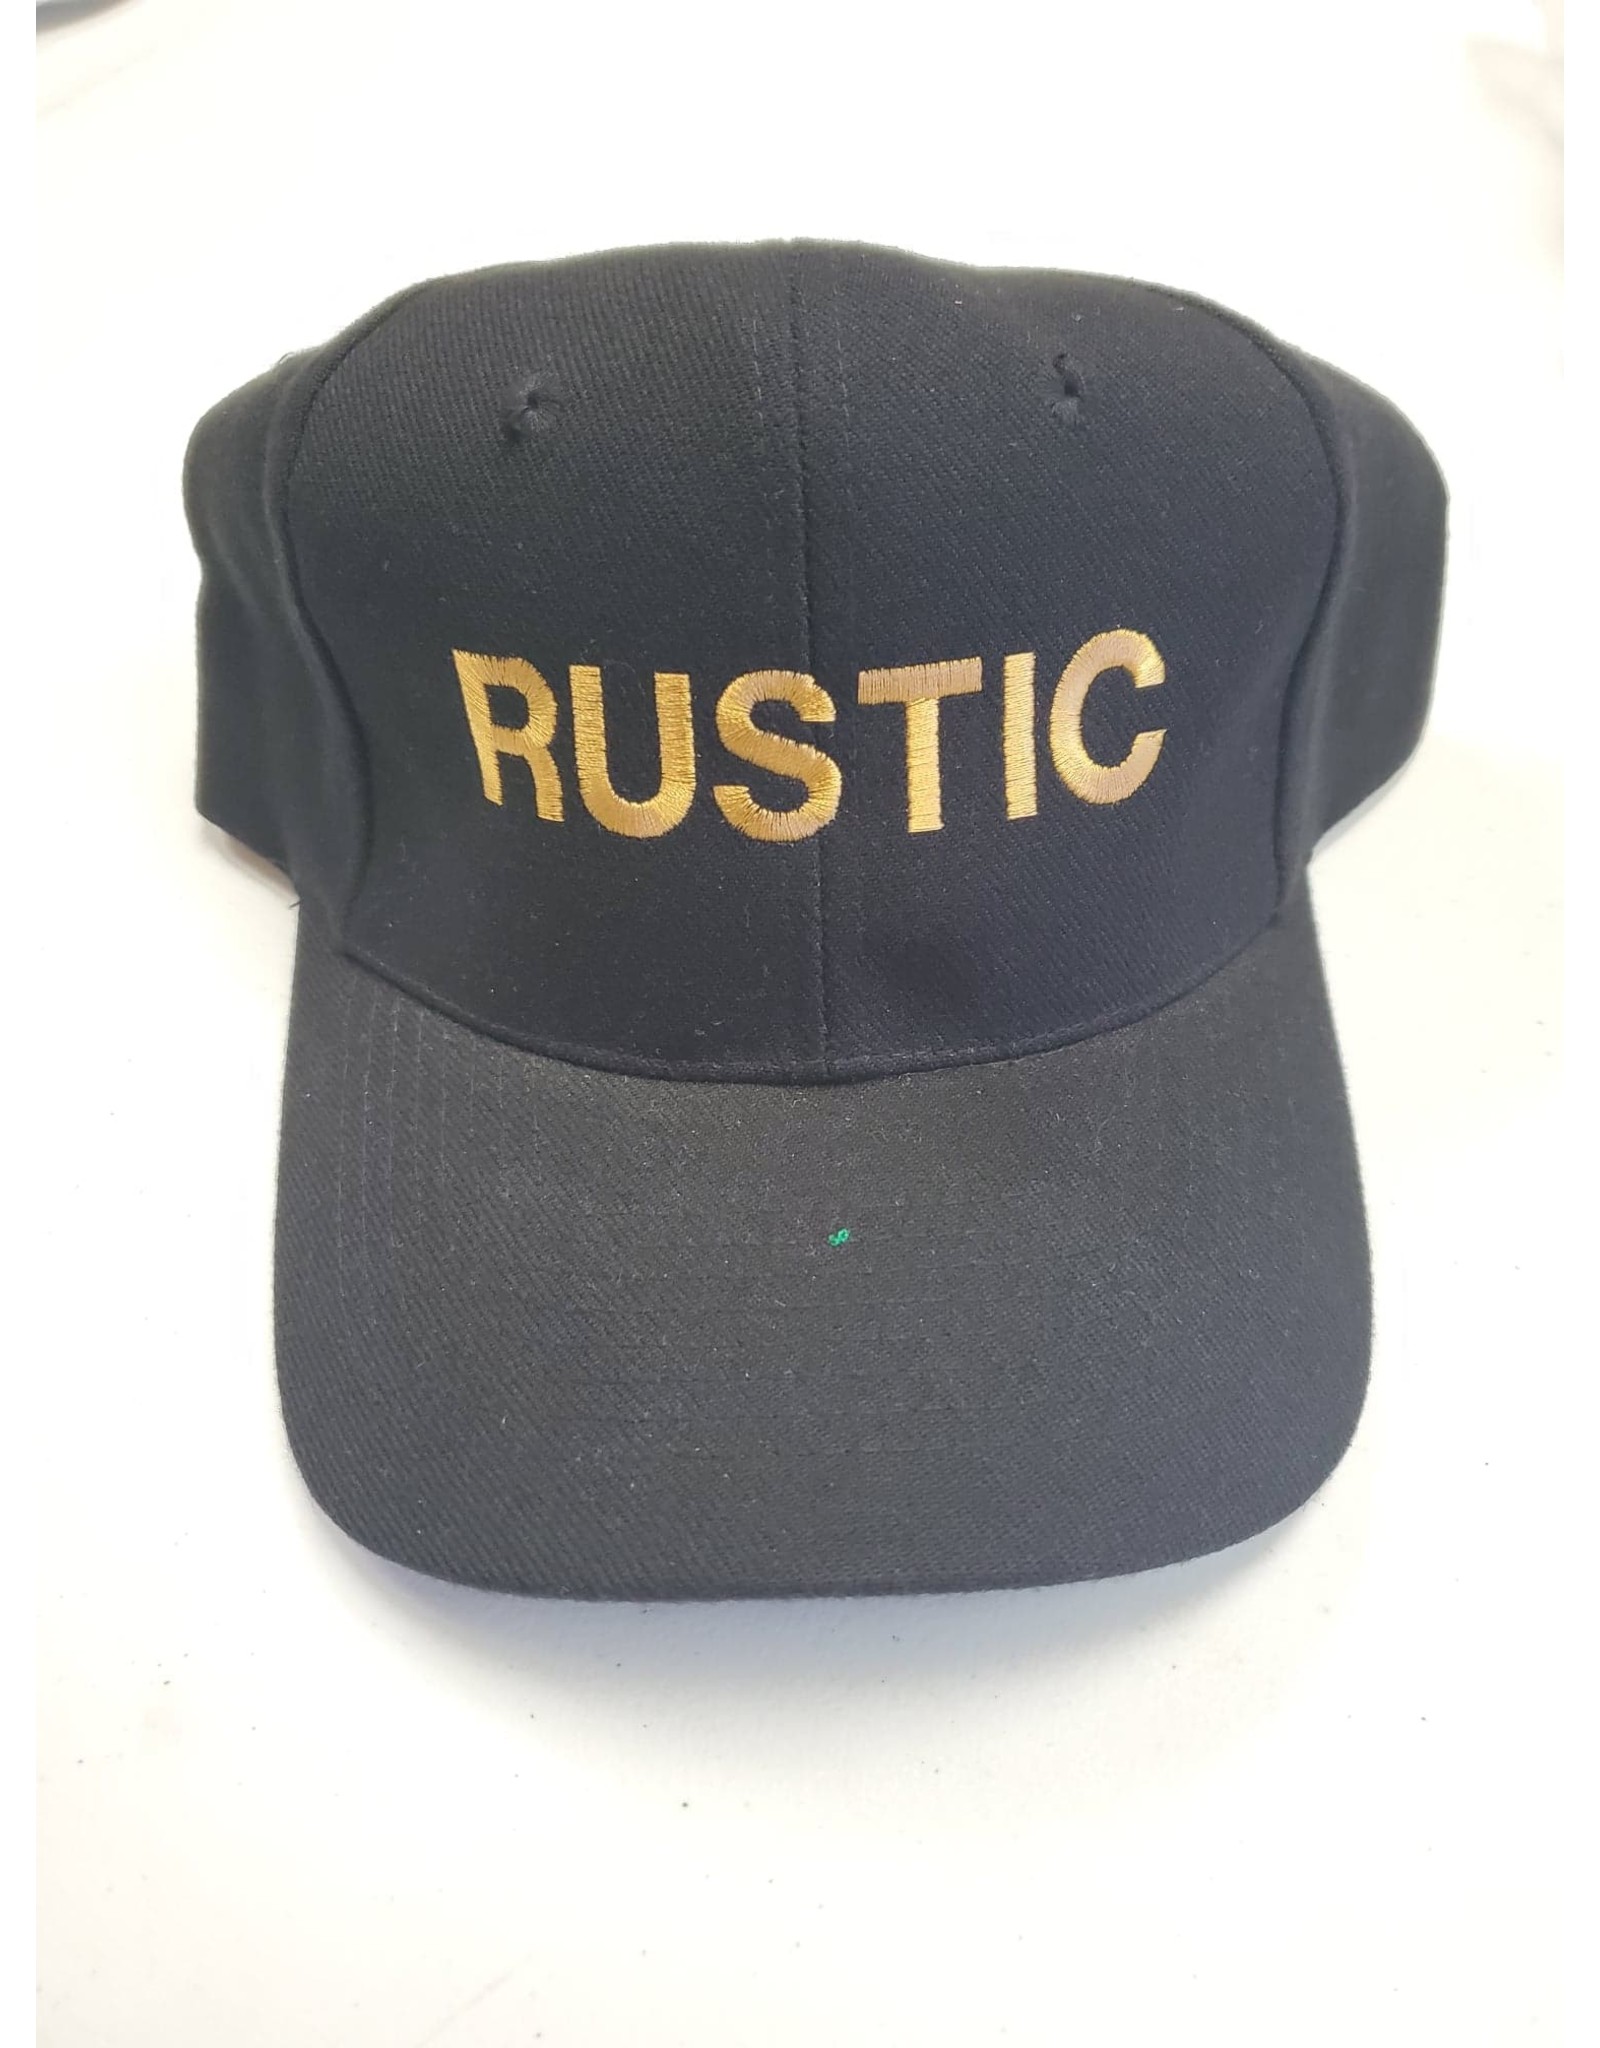 RUSTIC FAC Black Hat